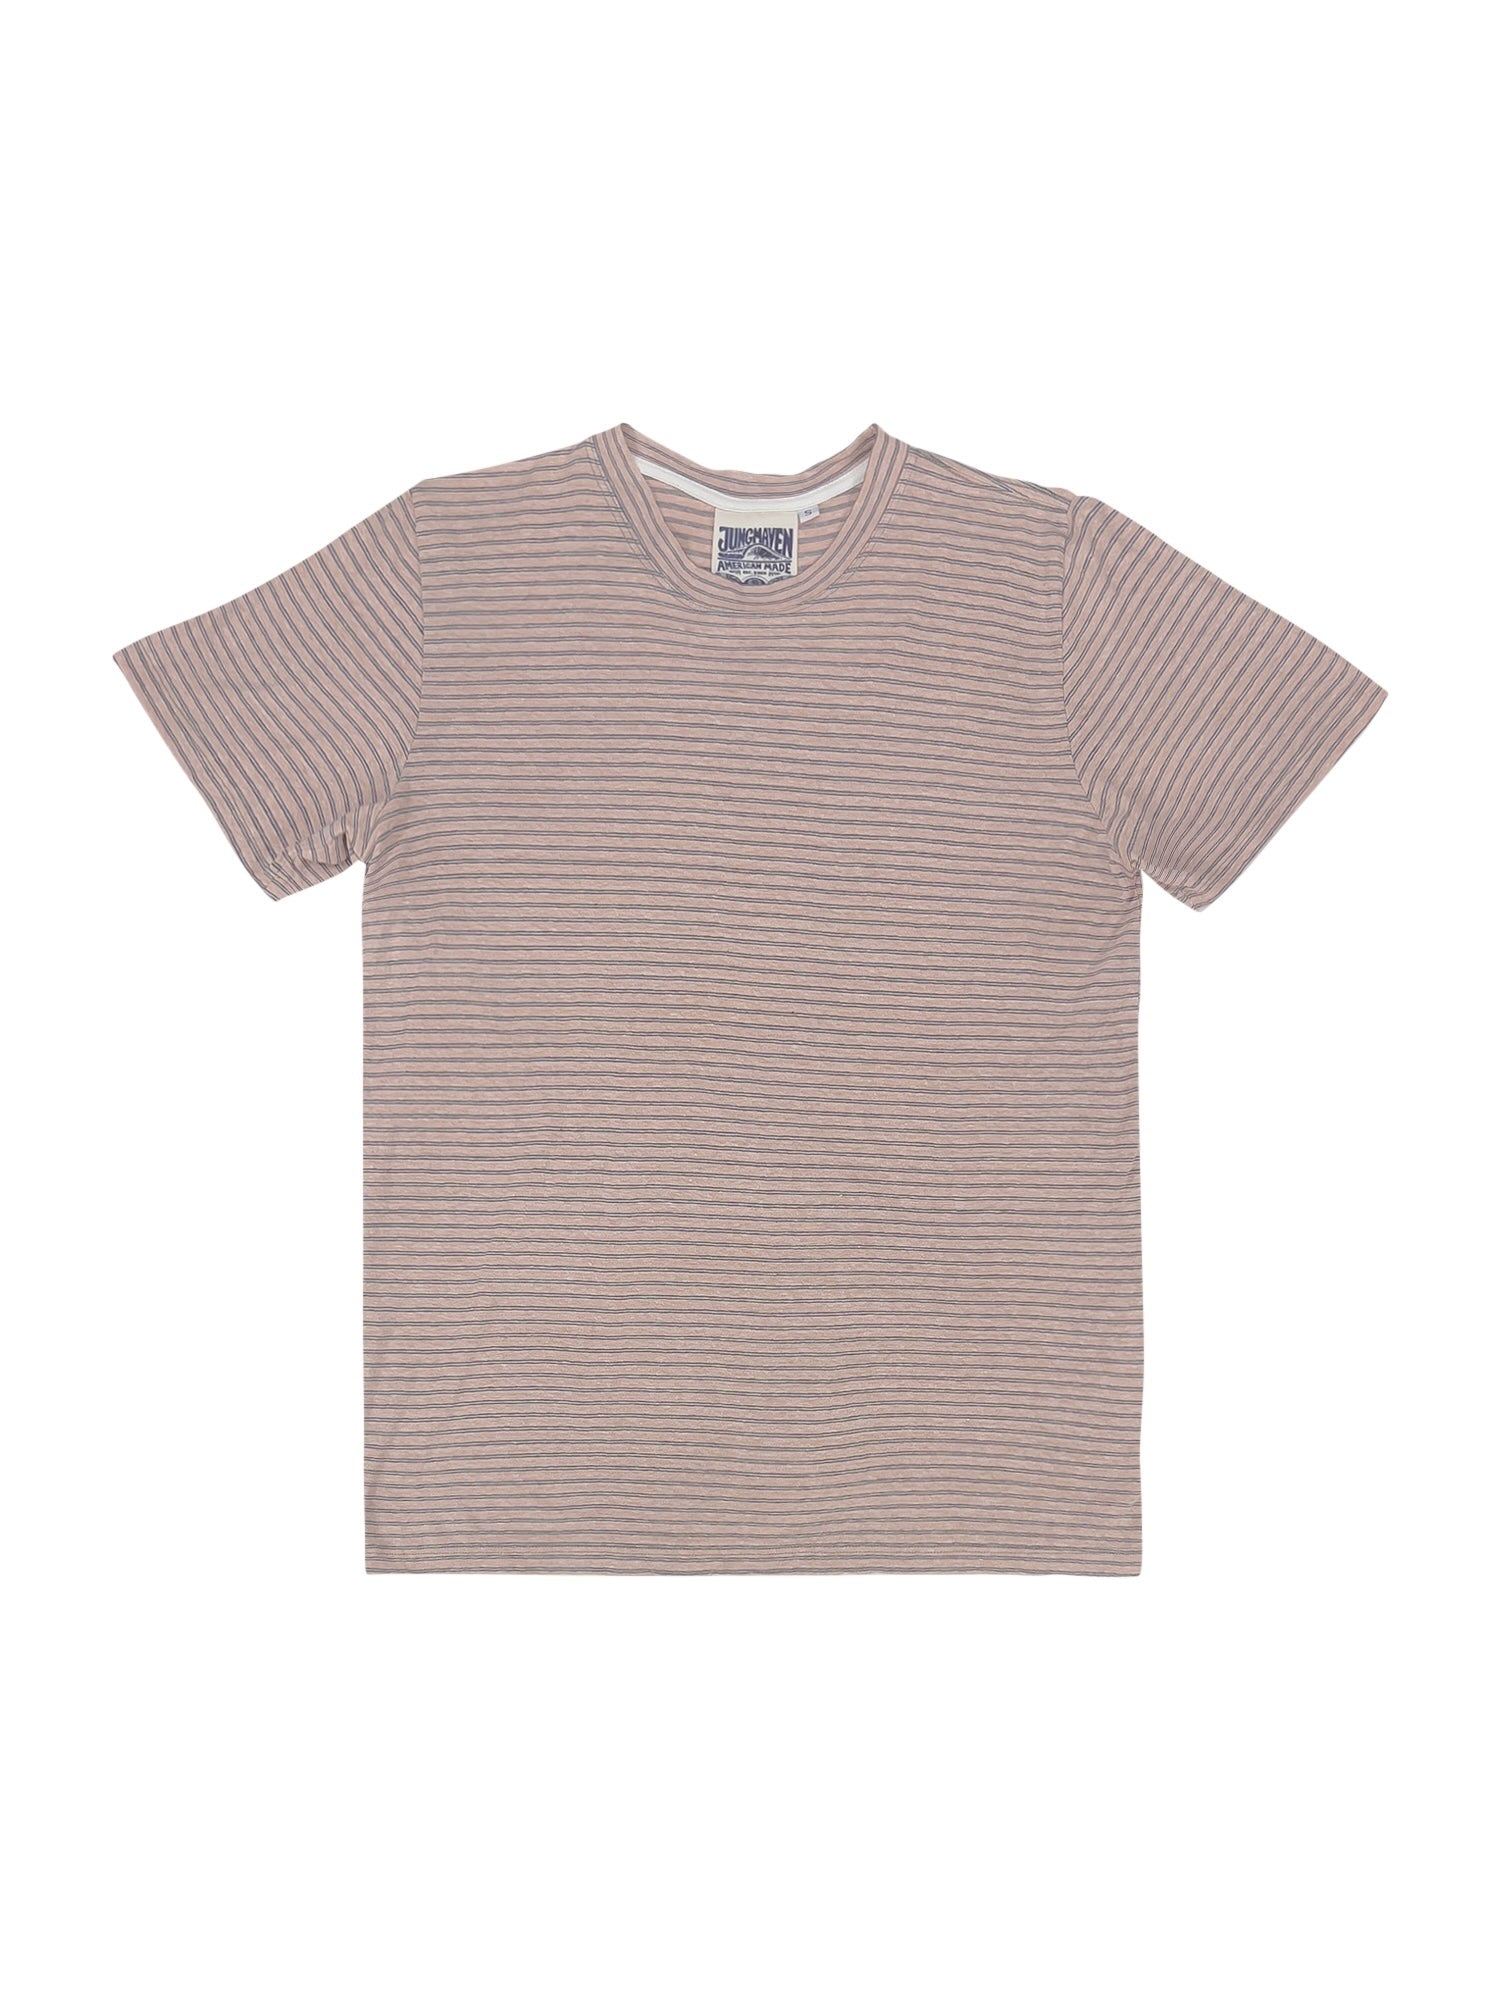 Stripe Jung Tee | Jungmaven Hemp Clothing & Accessories / Color: Pink/Blue/Canvas Thin Stripe